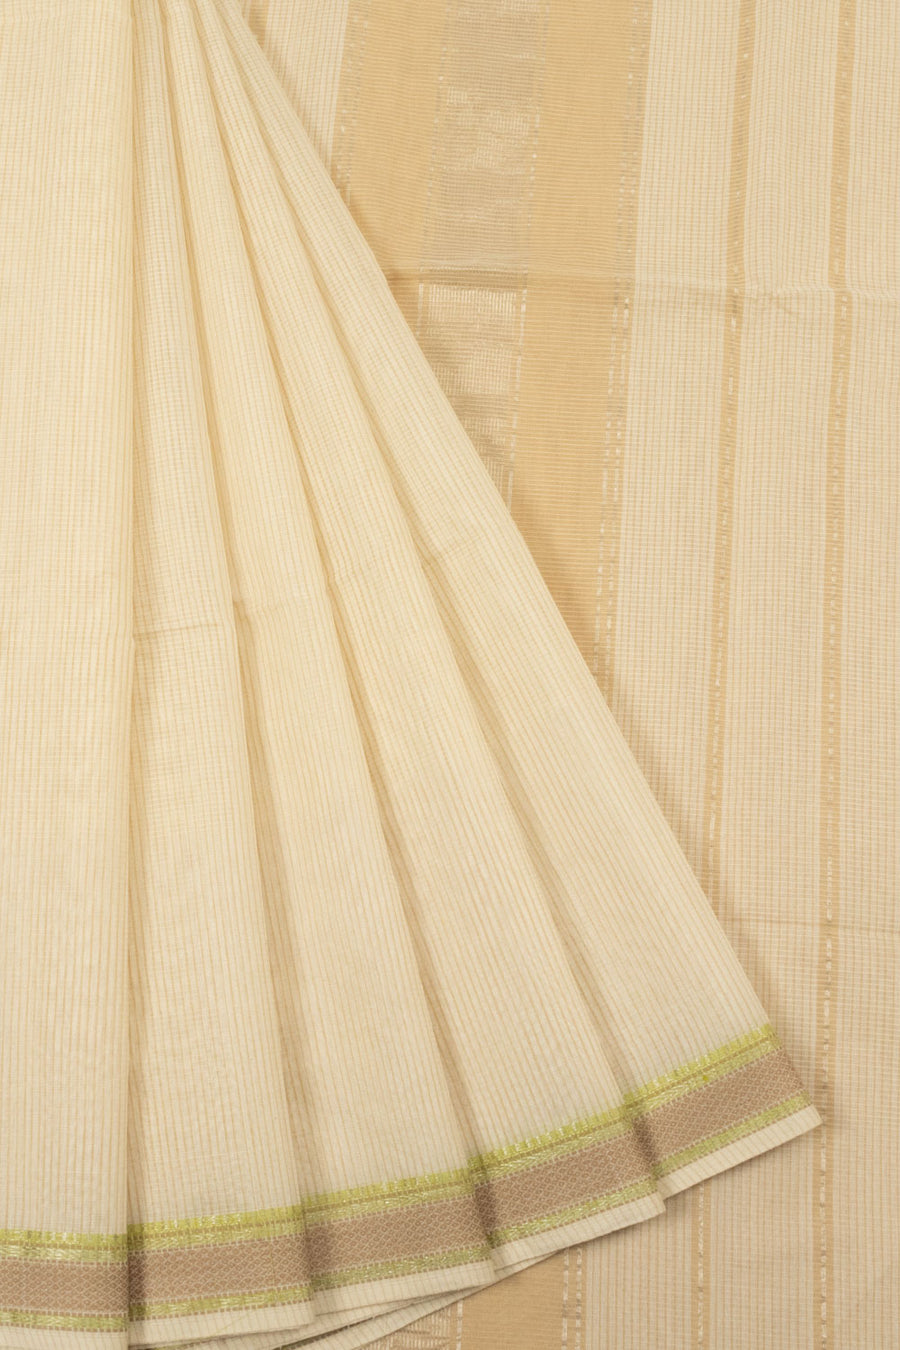 Off White Handloom Maheshwari Silk Cotton Saree  - Avishya